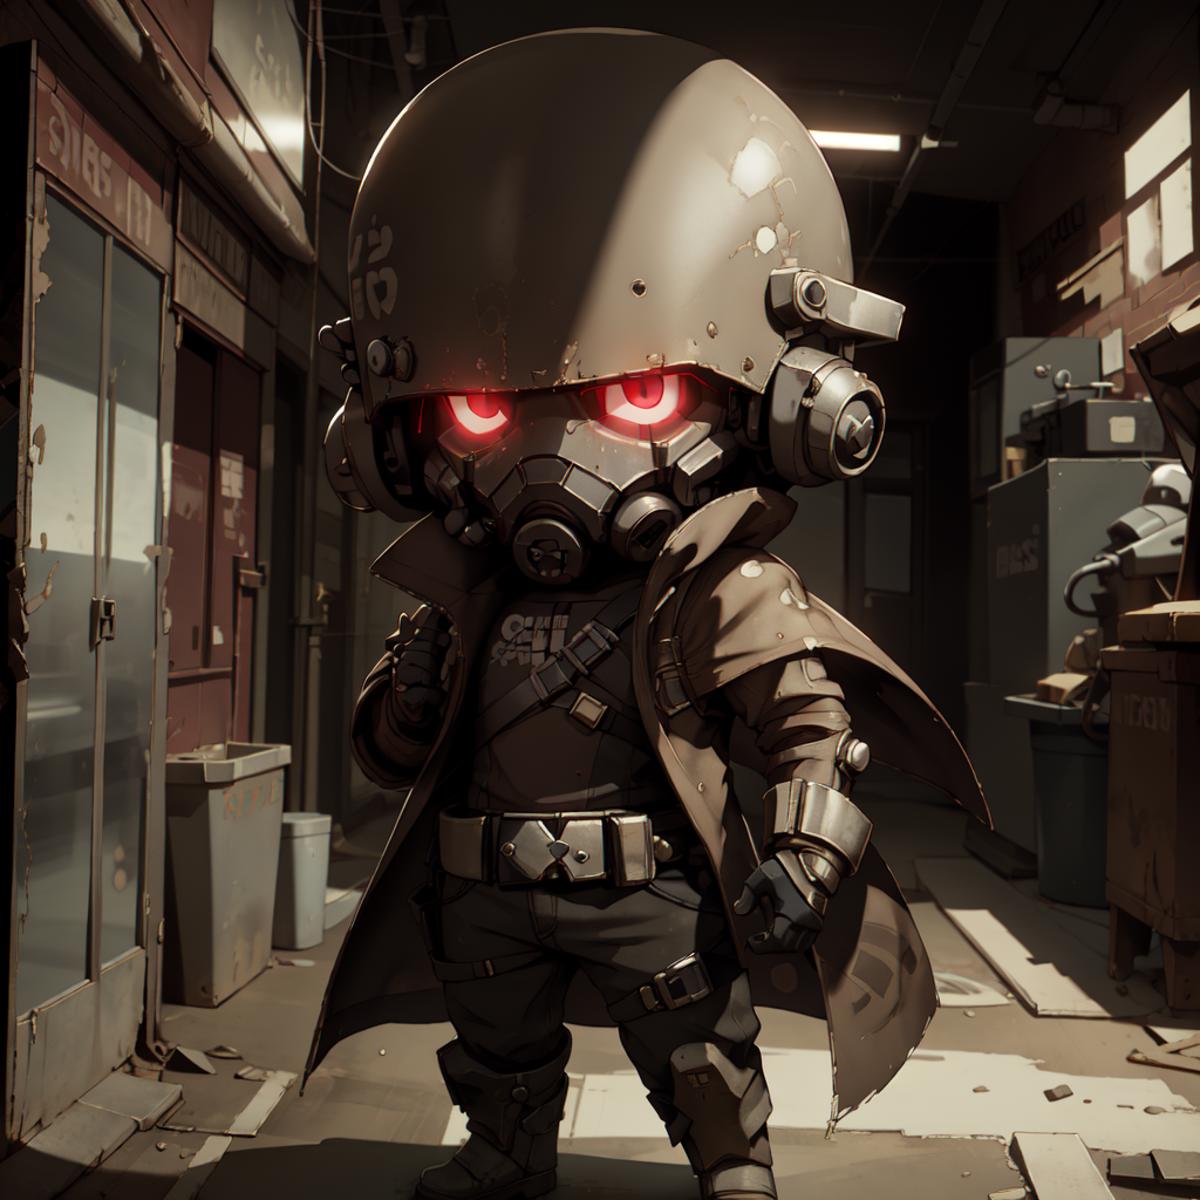 NCR Ranger combat armor (Fallout:New Vegas) image by Yoshidins